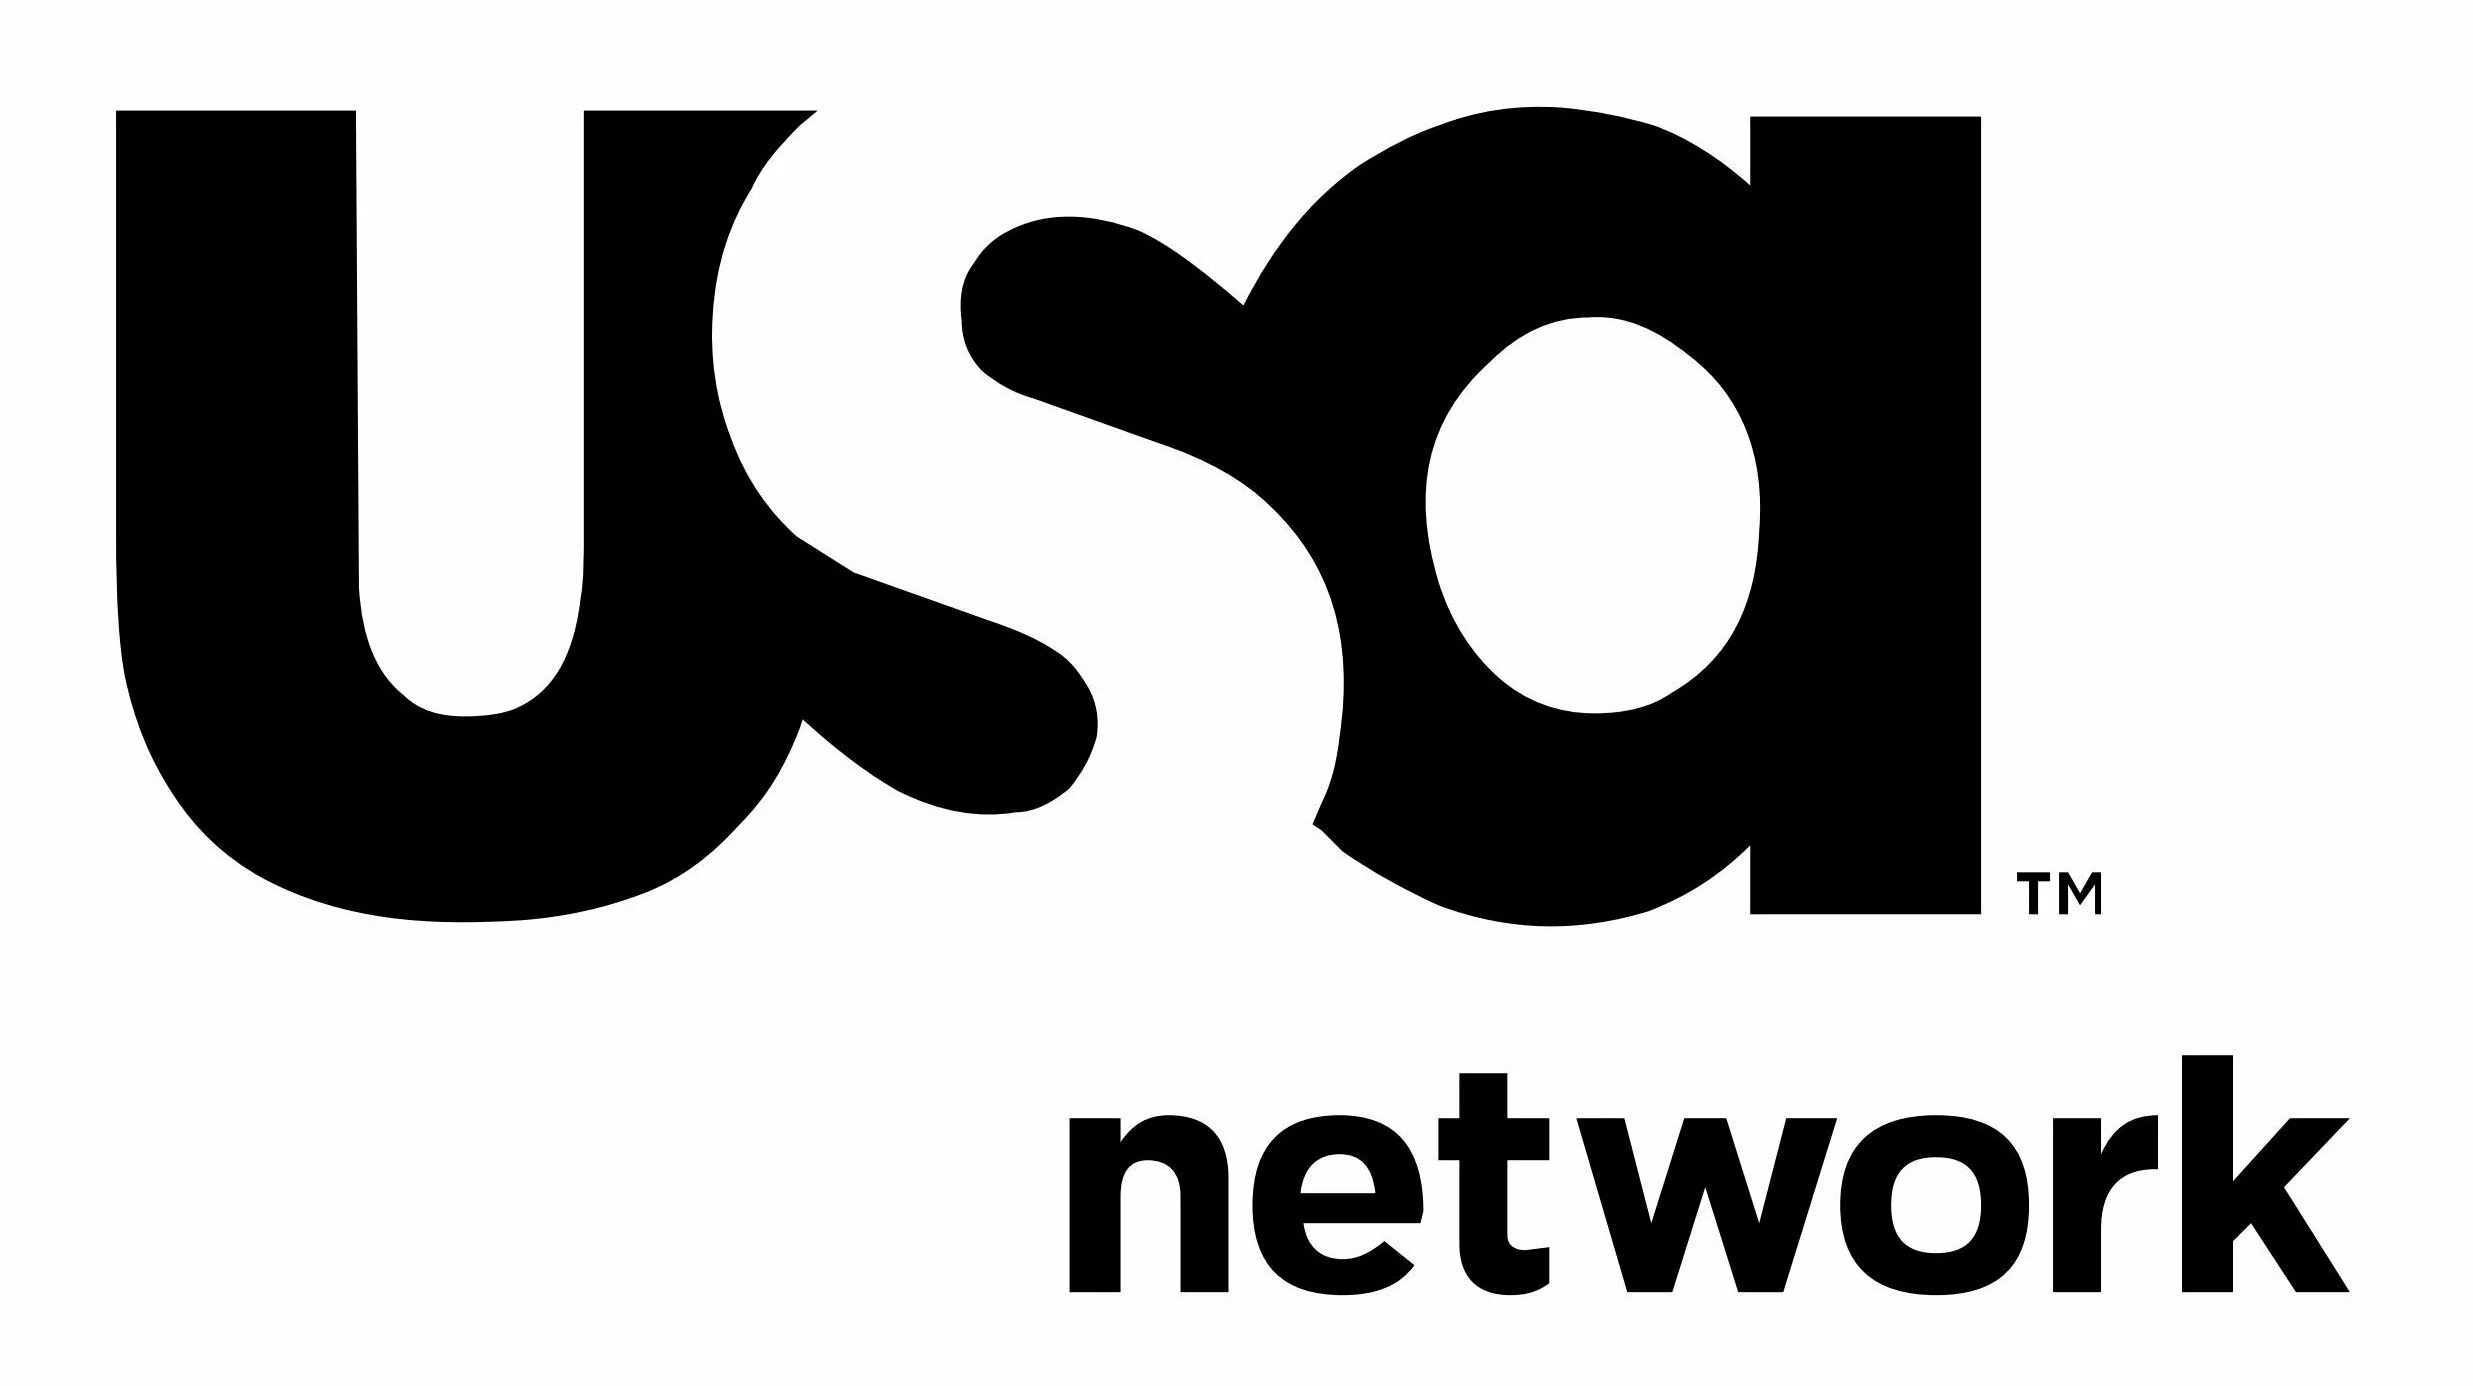 USA Network tv live stream | usa network worldsports2.com